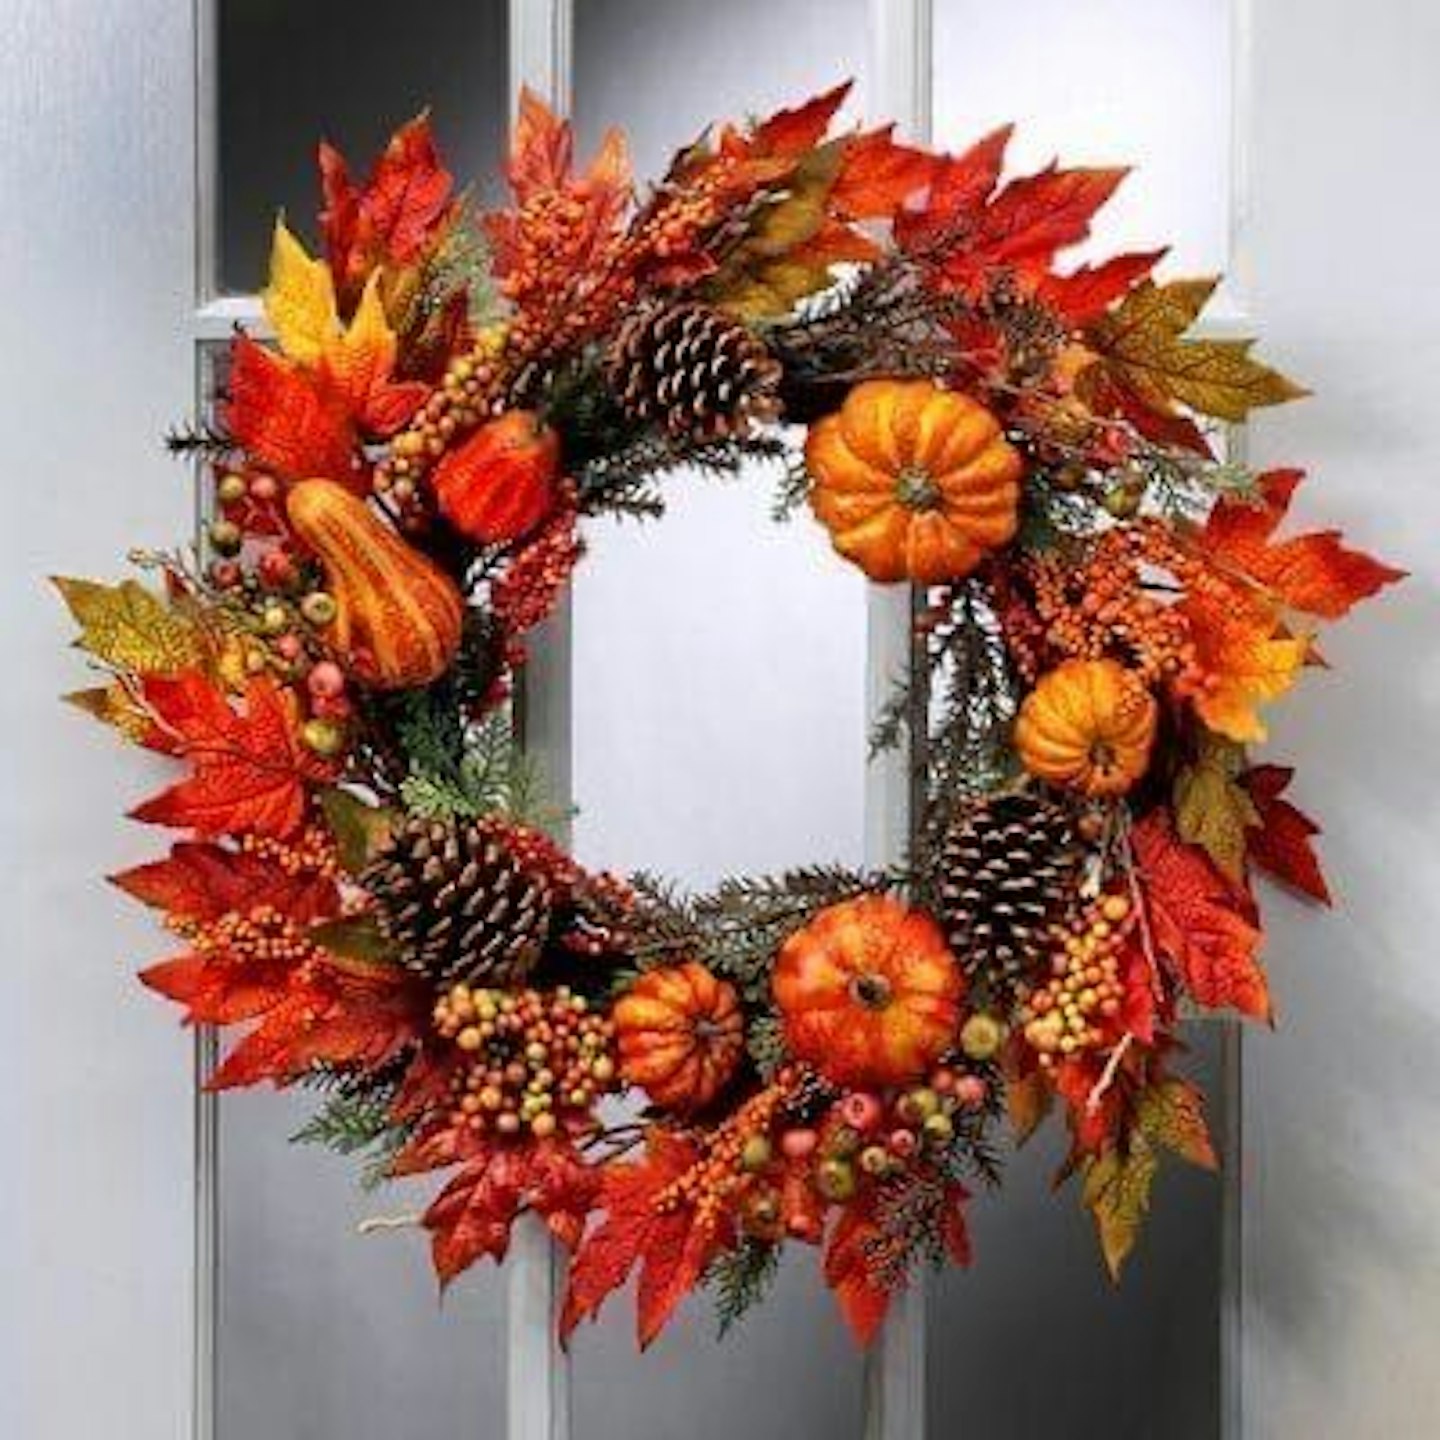 Autumn wreath with pumpkins